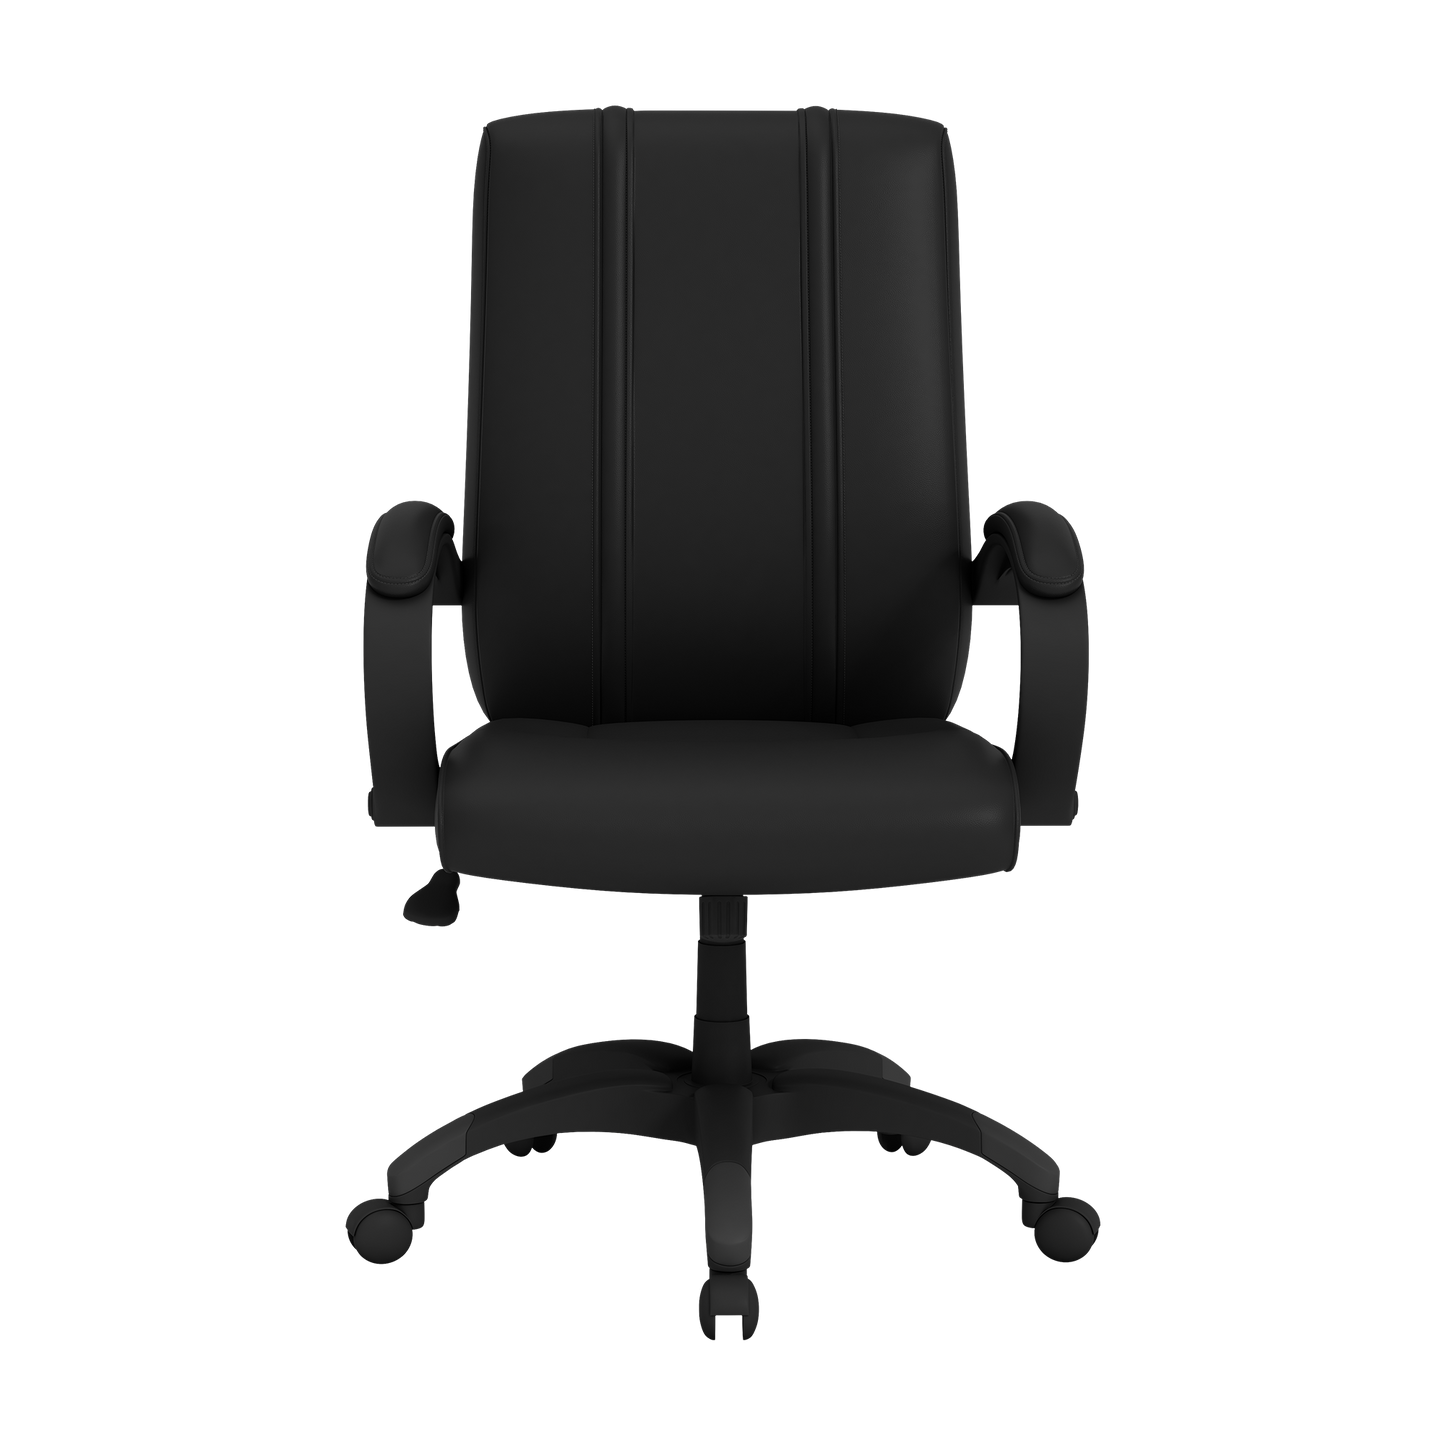 Office Chair 1000 with  Buffalo Bills Helmet Logo